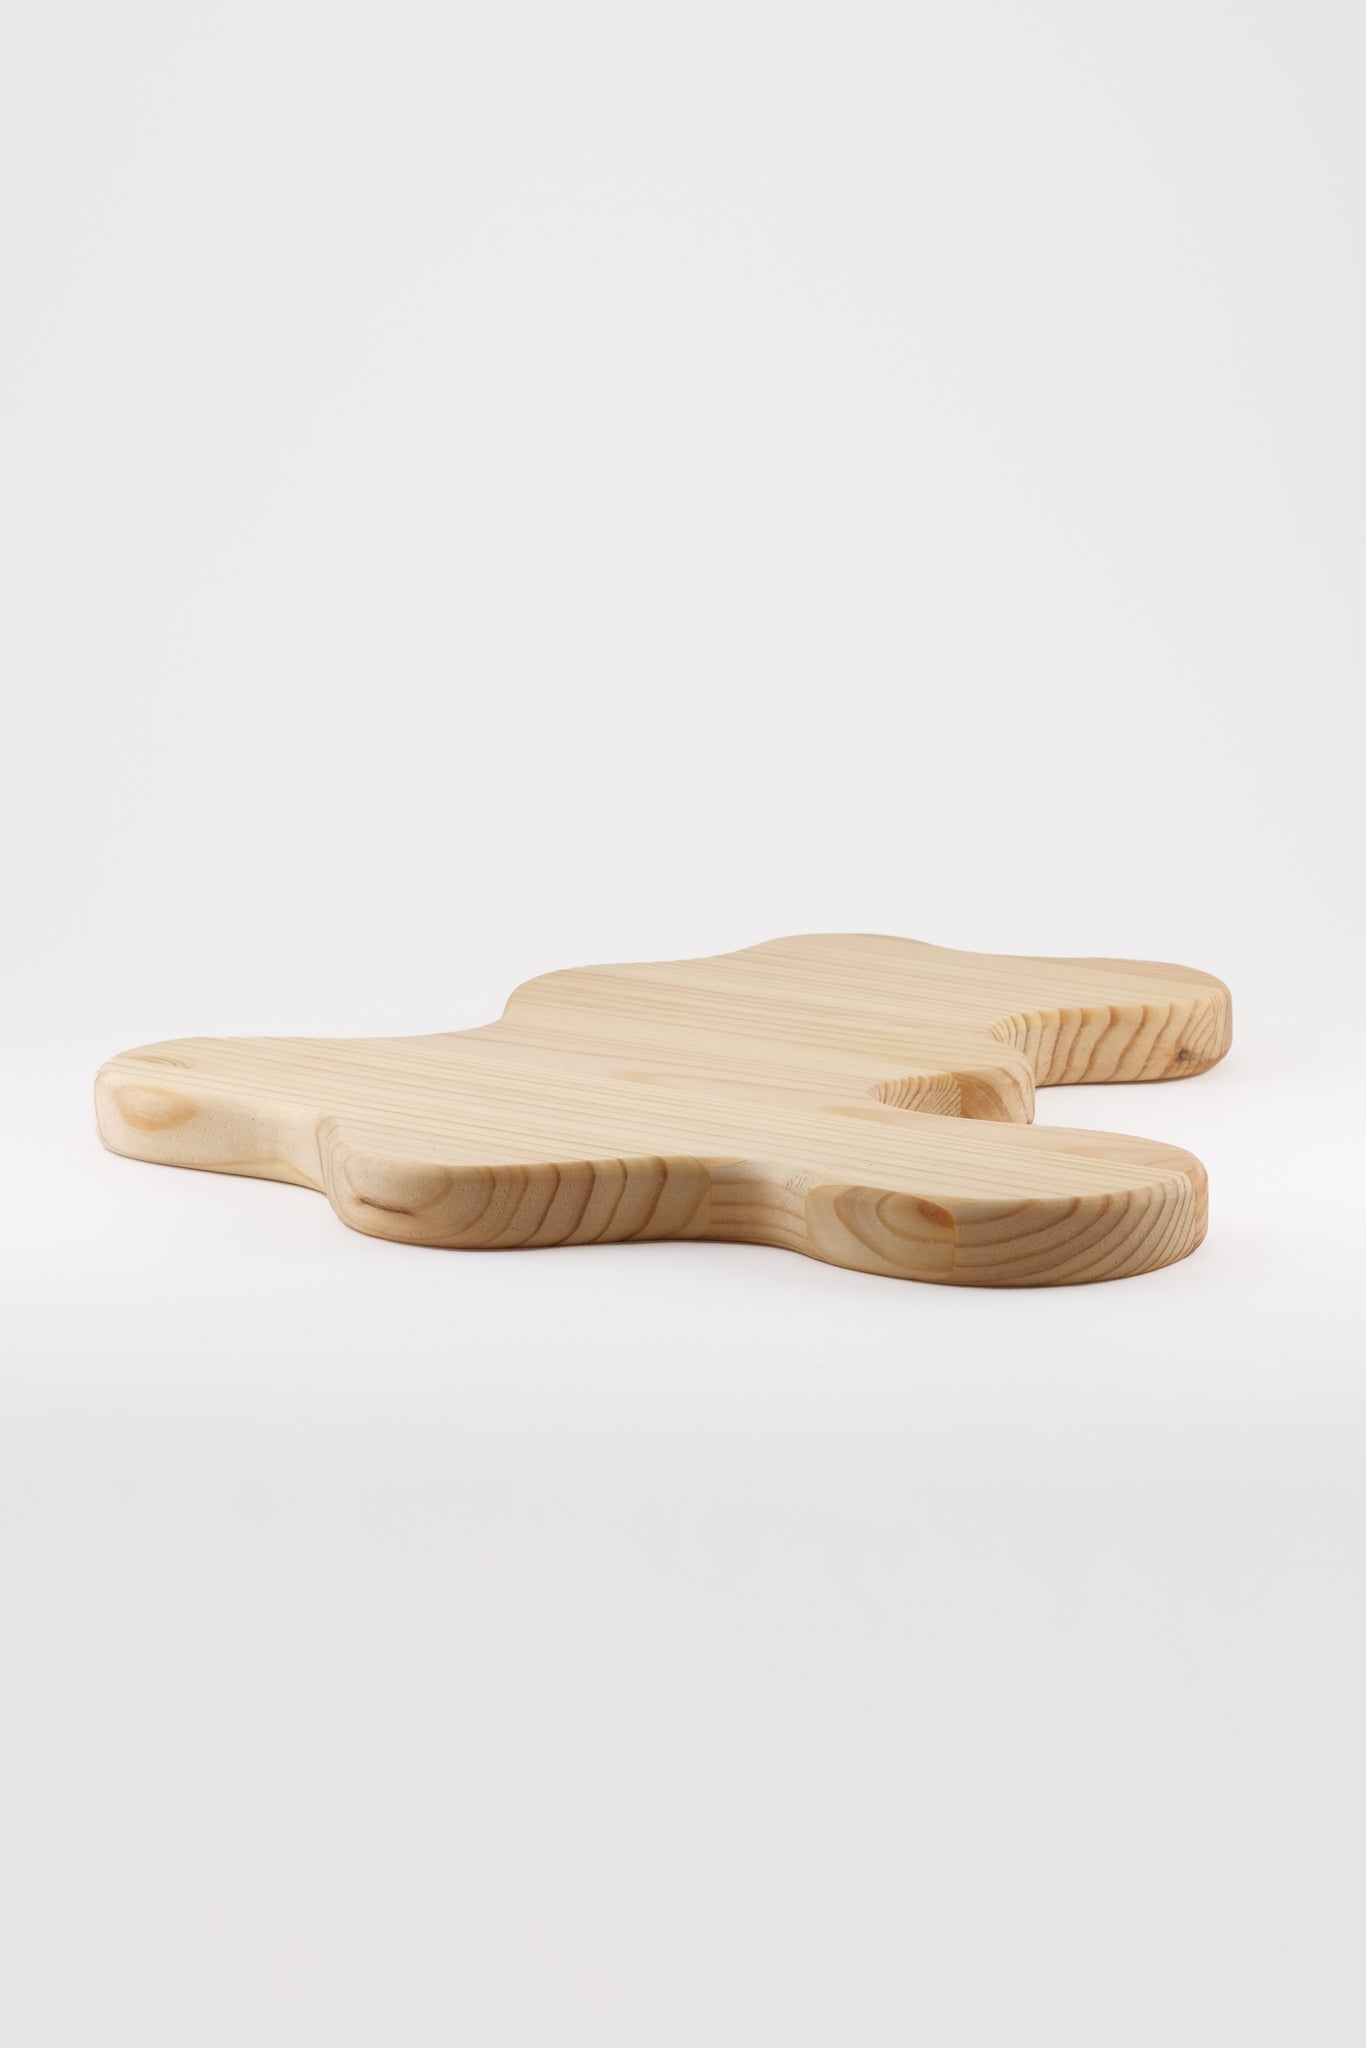 Pine cutting board-Thomas Lissert-[interior]-[design]-KIOSK48TH